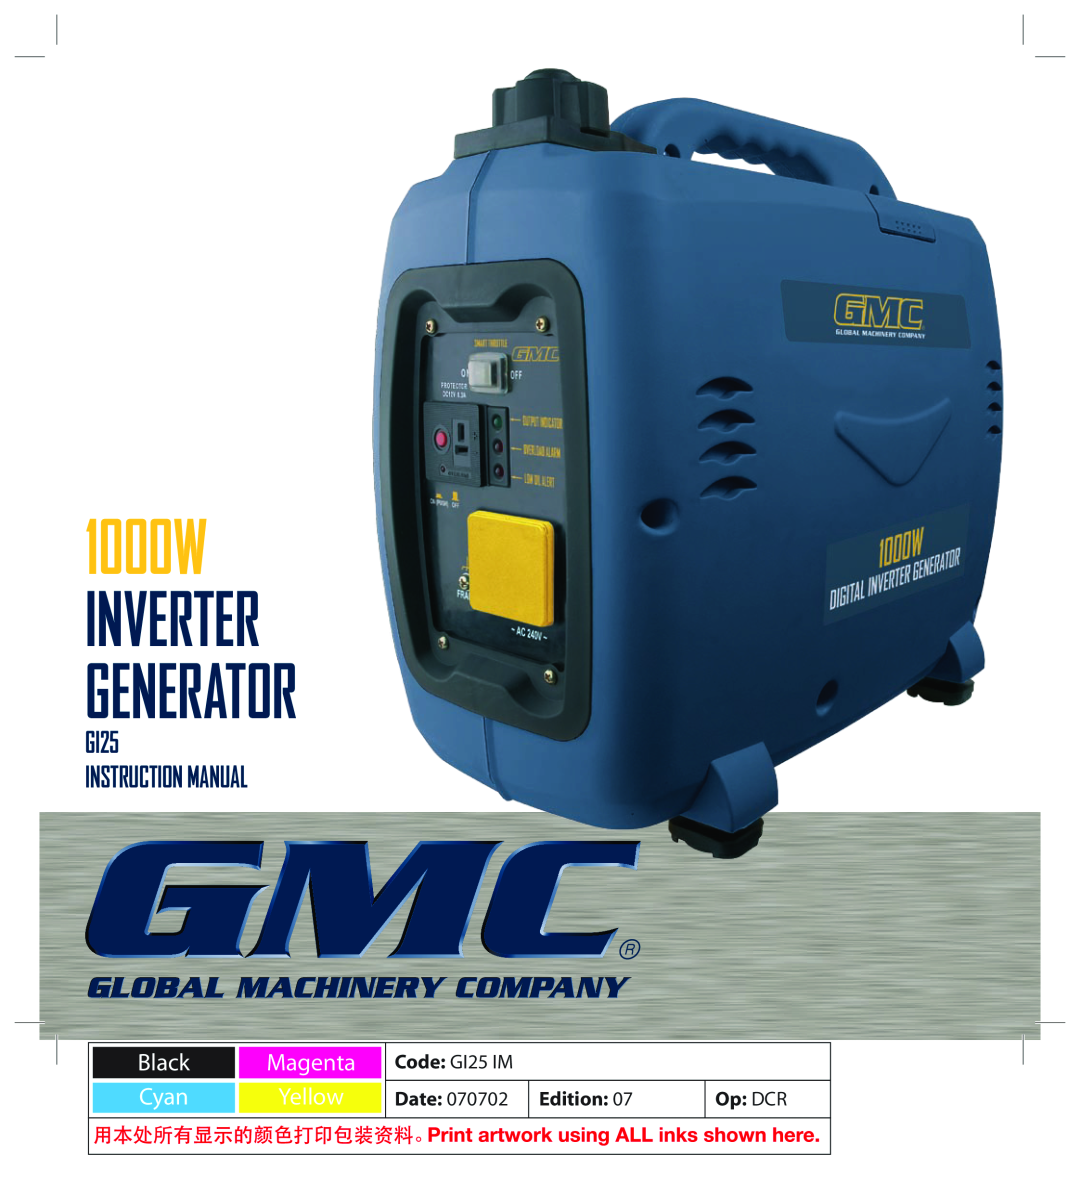 Global Machinery Company G25 instruction manual 1000W INVERTER GENERATOR, Black Magenta Cyan Yellow, Date, Edition, Op DCR 